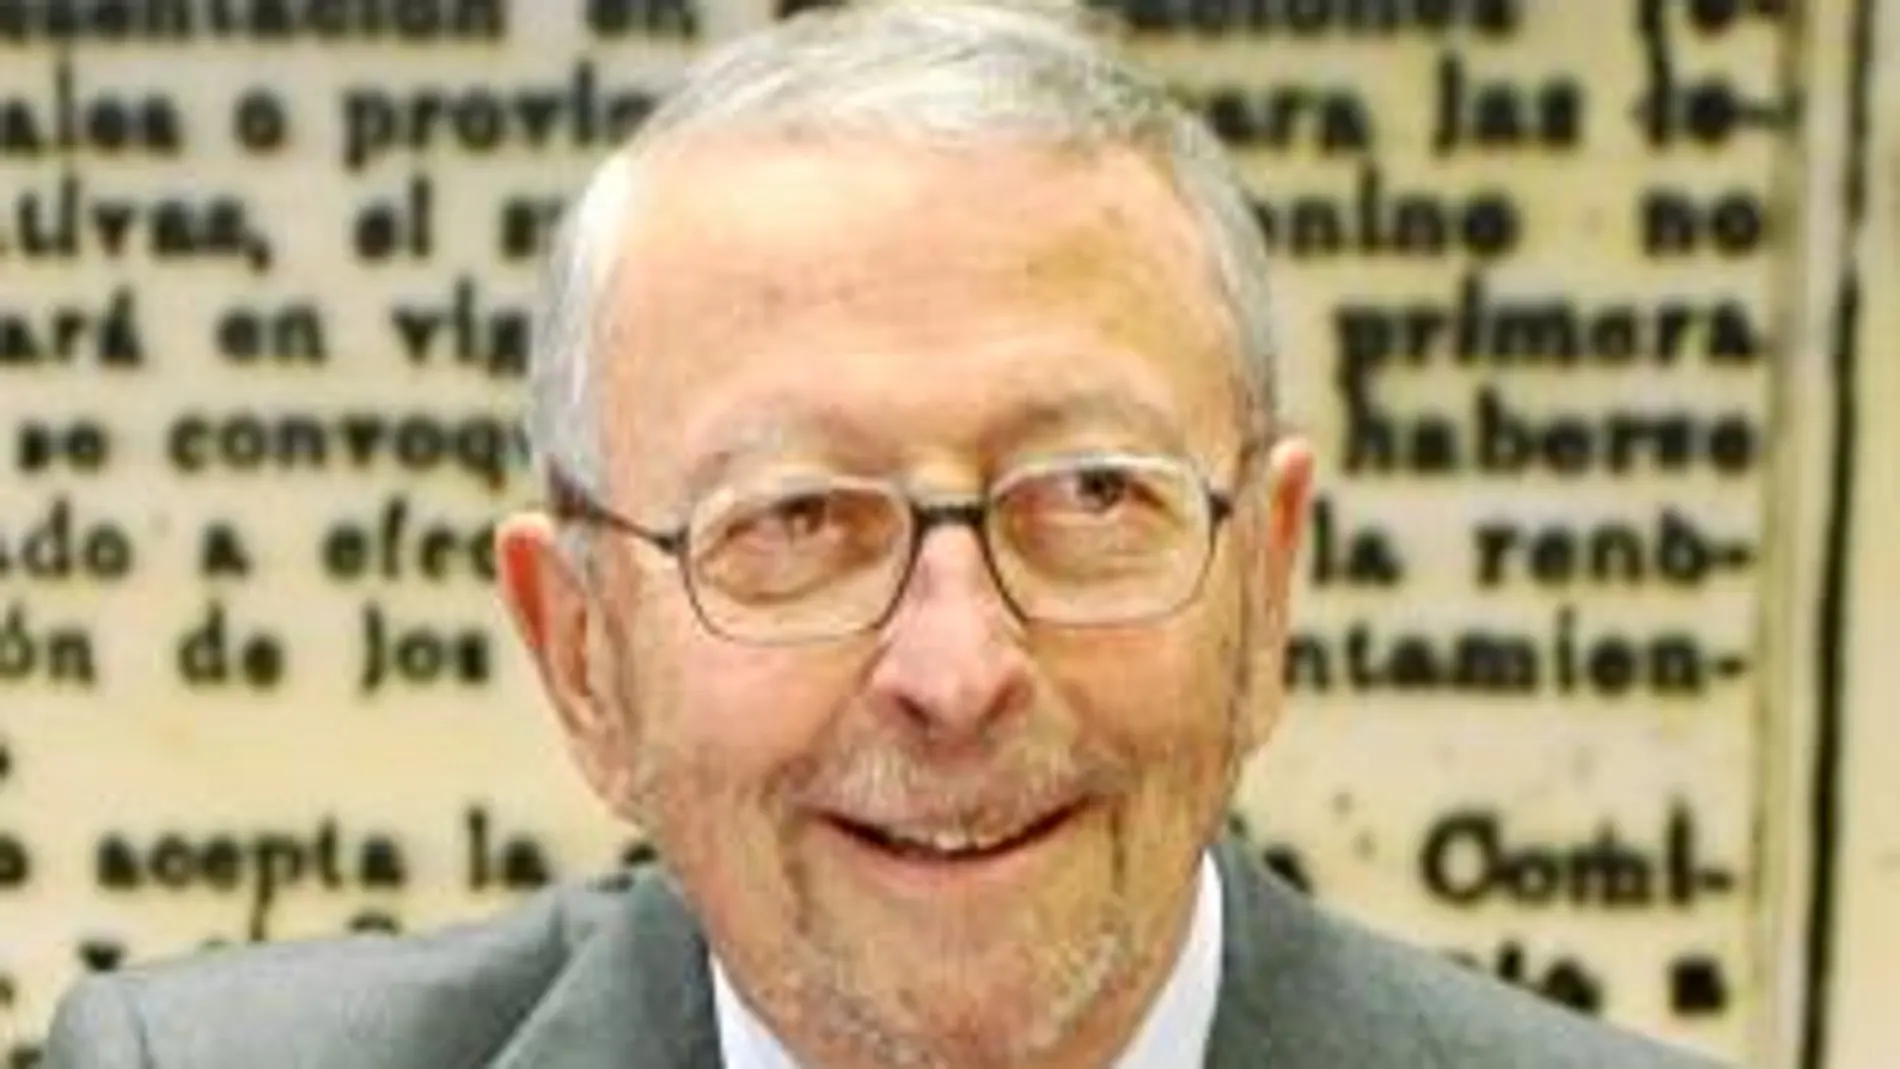 Alberto Oliart, presidente de RTVE